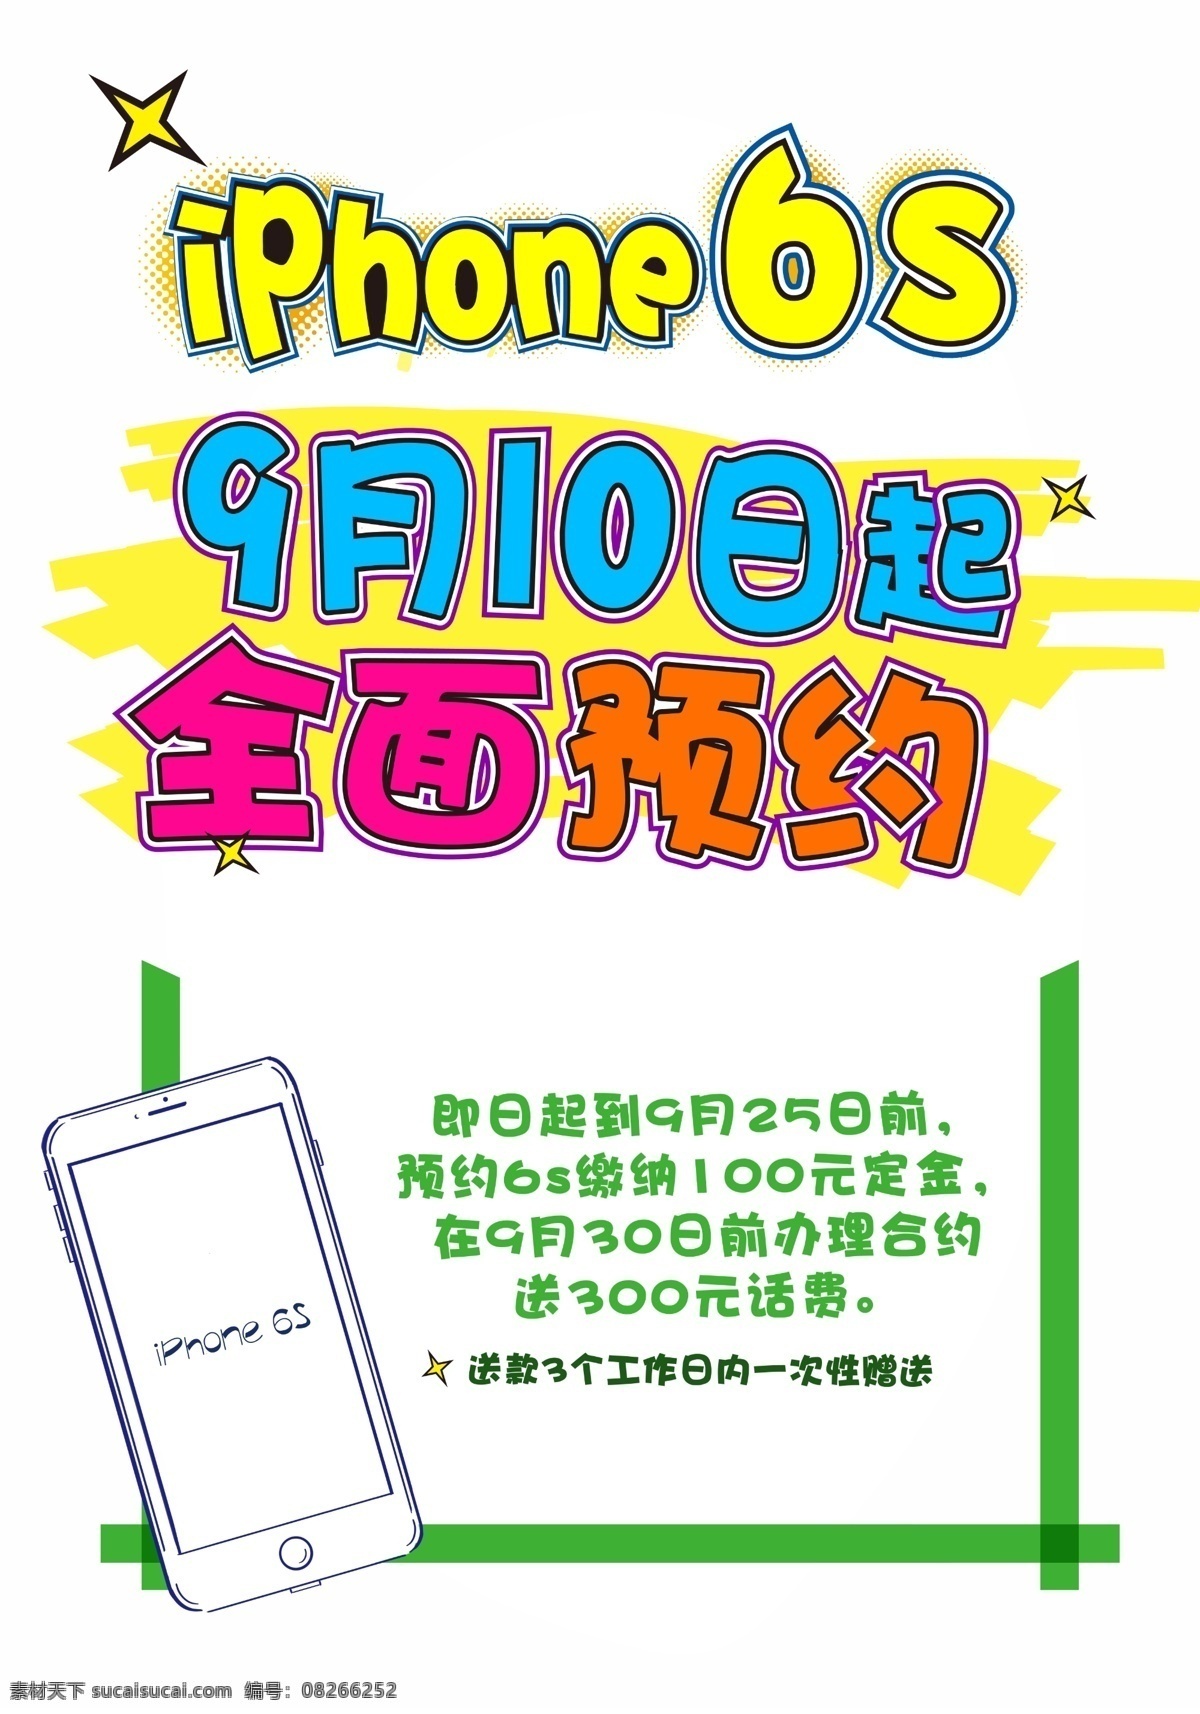 iphone 6s预约海报 iphone6s 预约海报 pop海报 手绘海报 大字报 手机模型 6s 9月10日 艺术字 联通 全面预约 白色